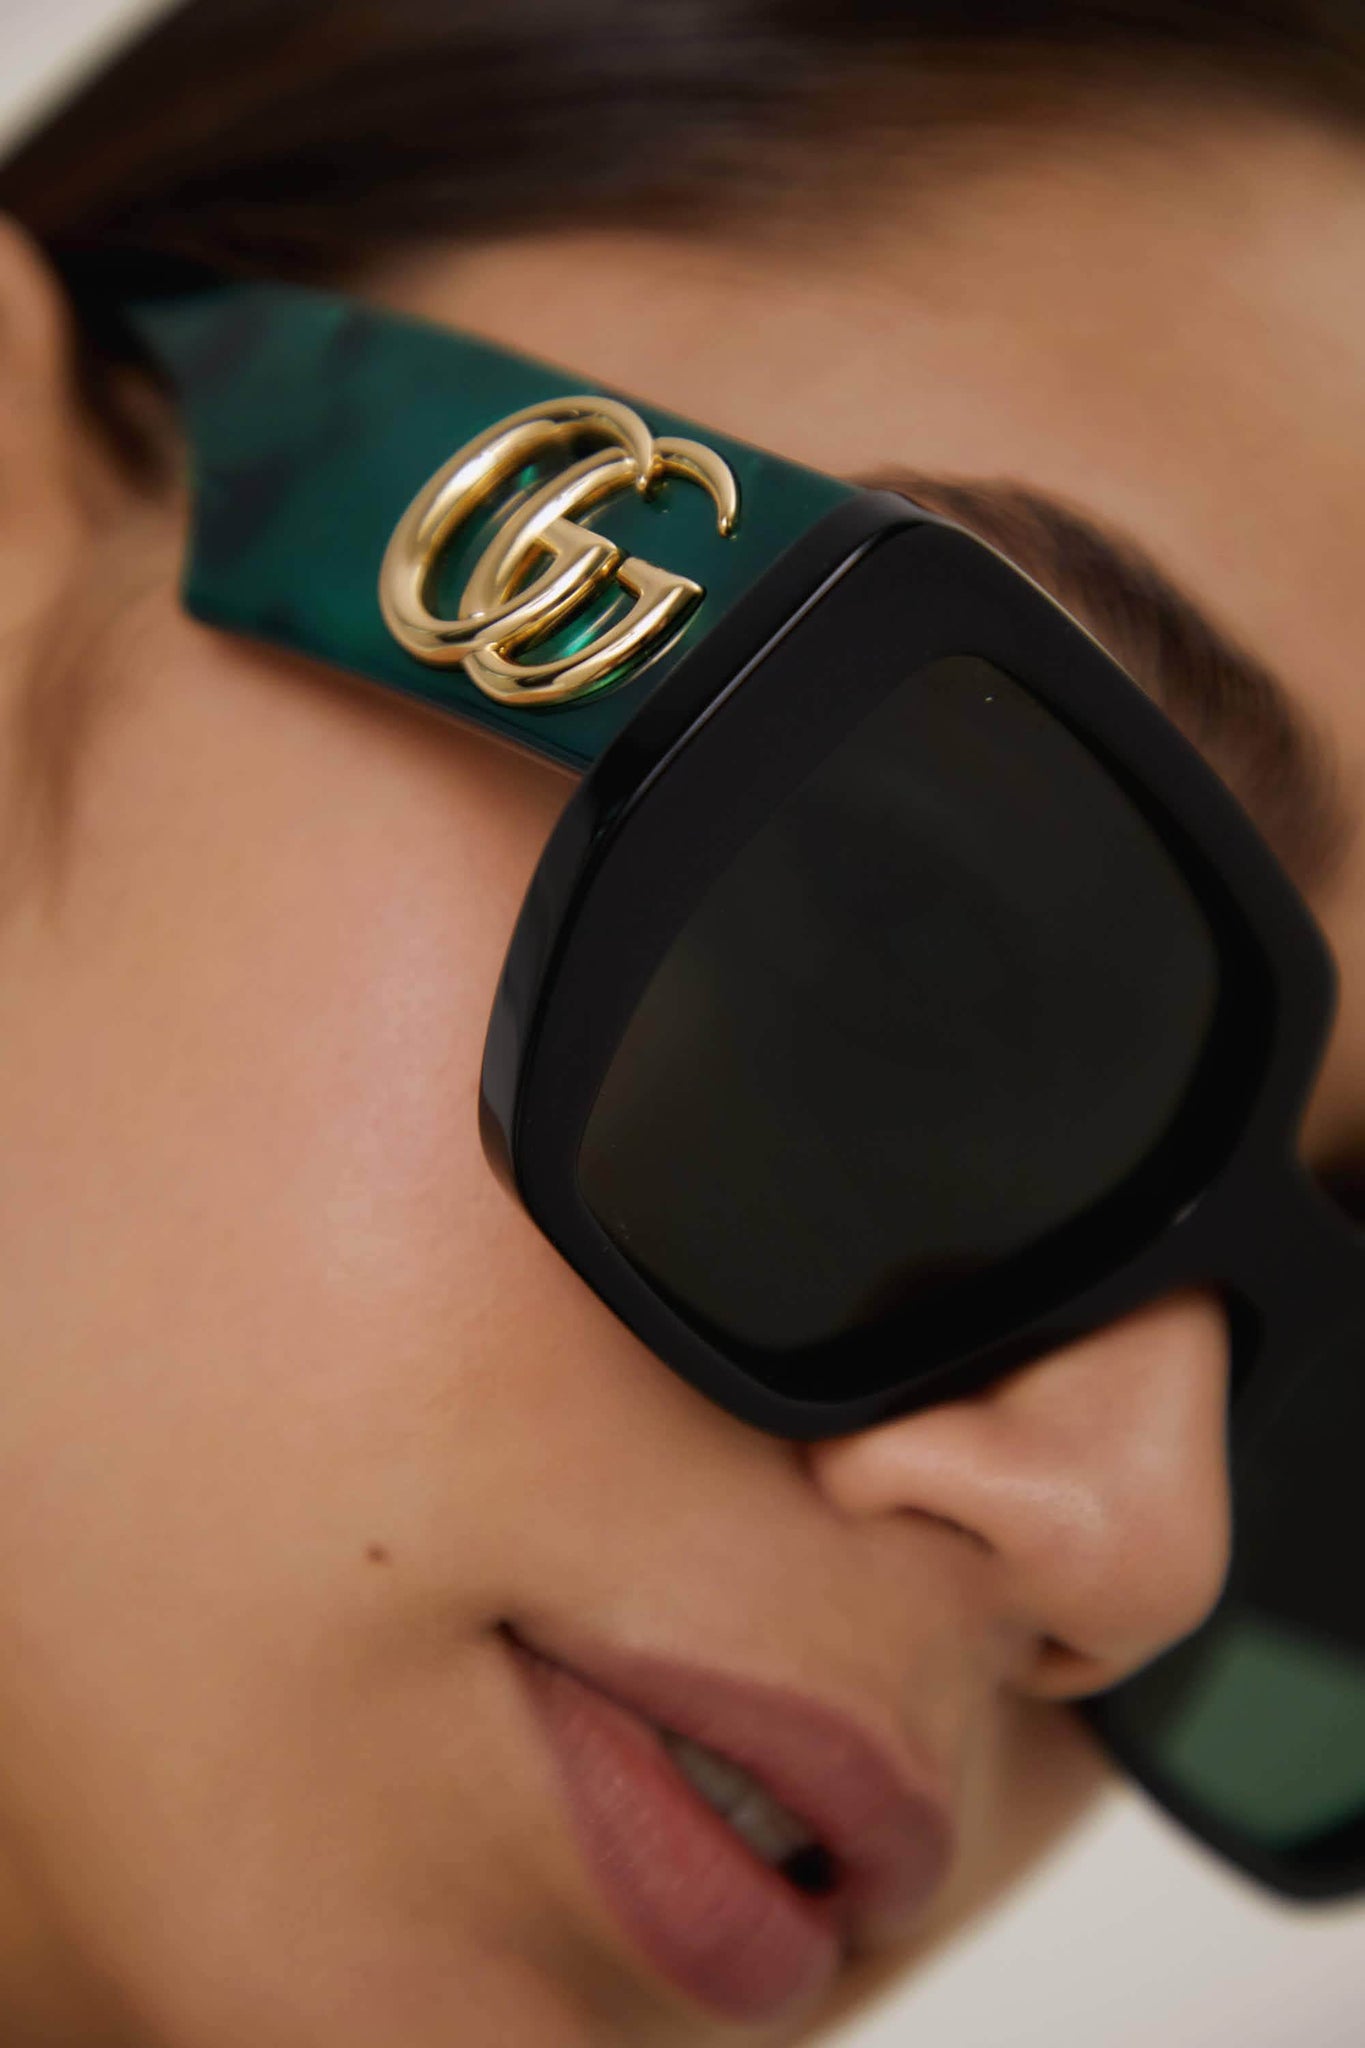 Gucci oversized and green sunglasses maxi logo